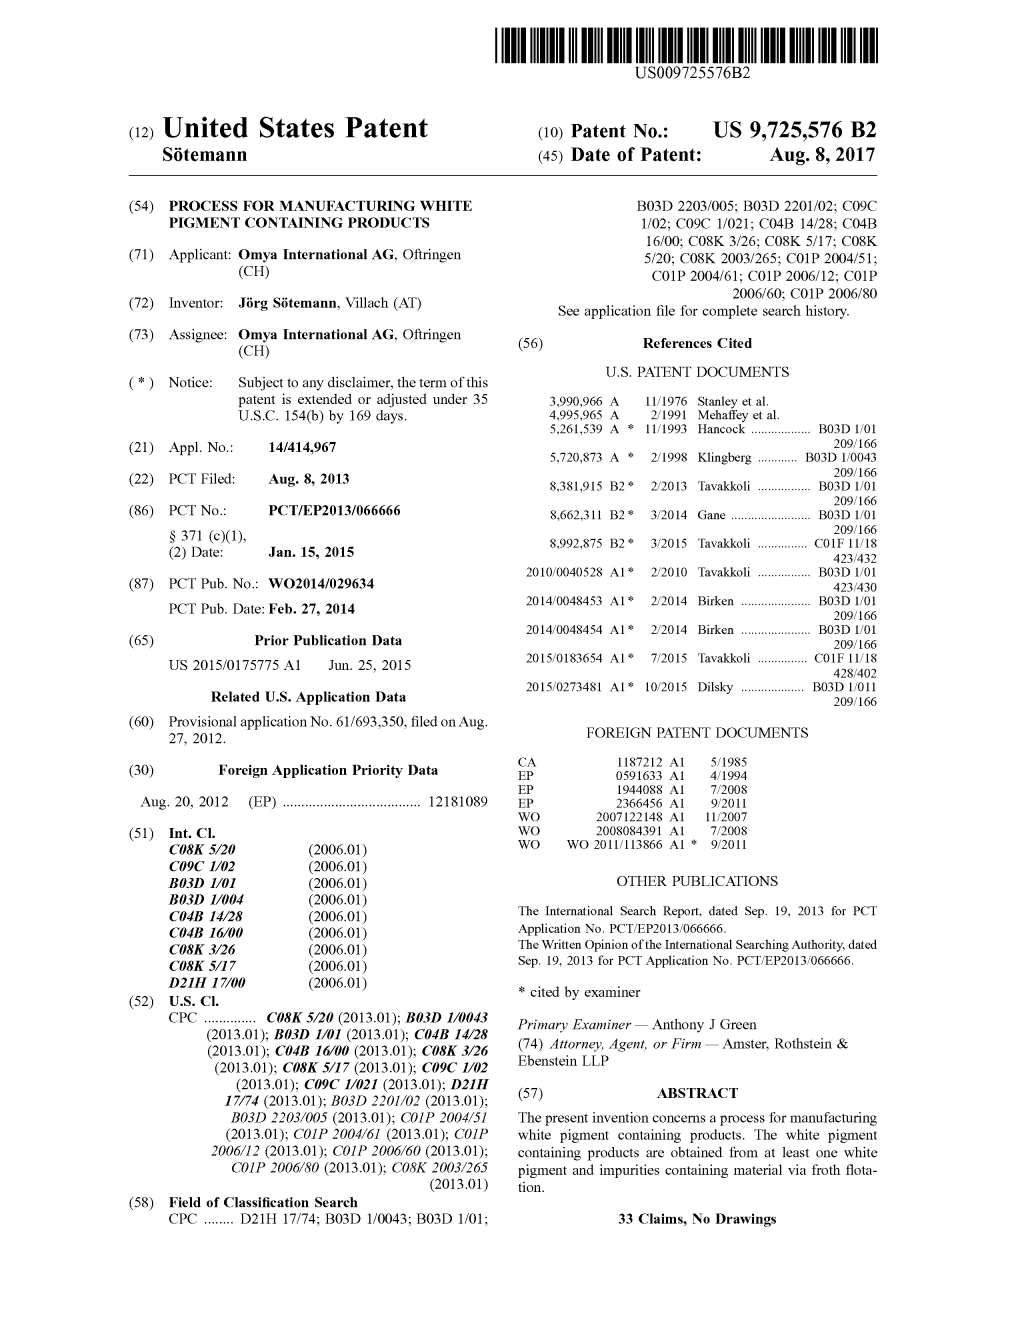 (12) United States Patent (10) Patent No.: US 9,725,576 B2 Sötemann (45) Date of Patent: Aug